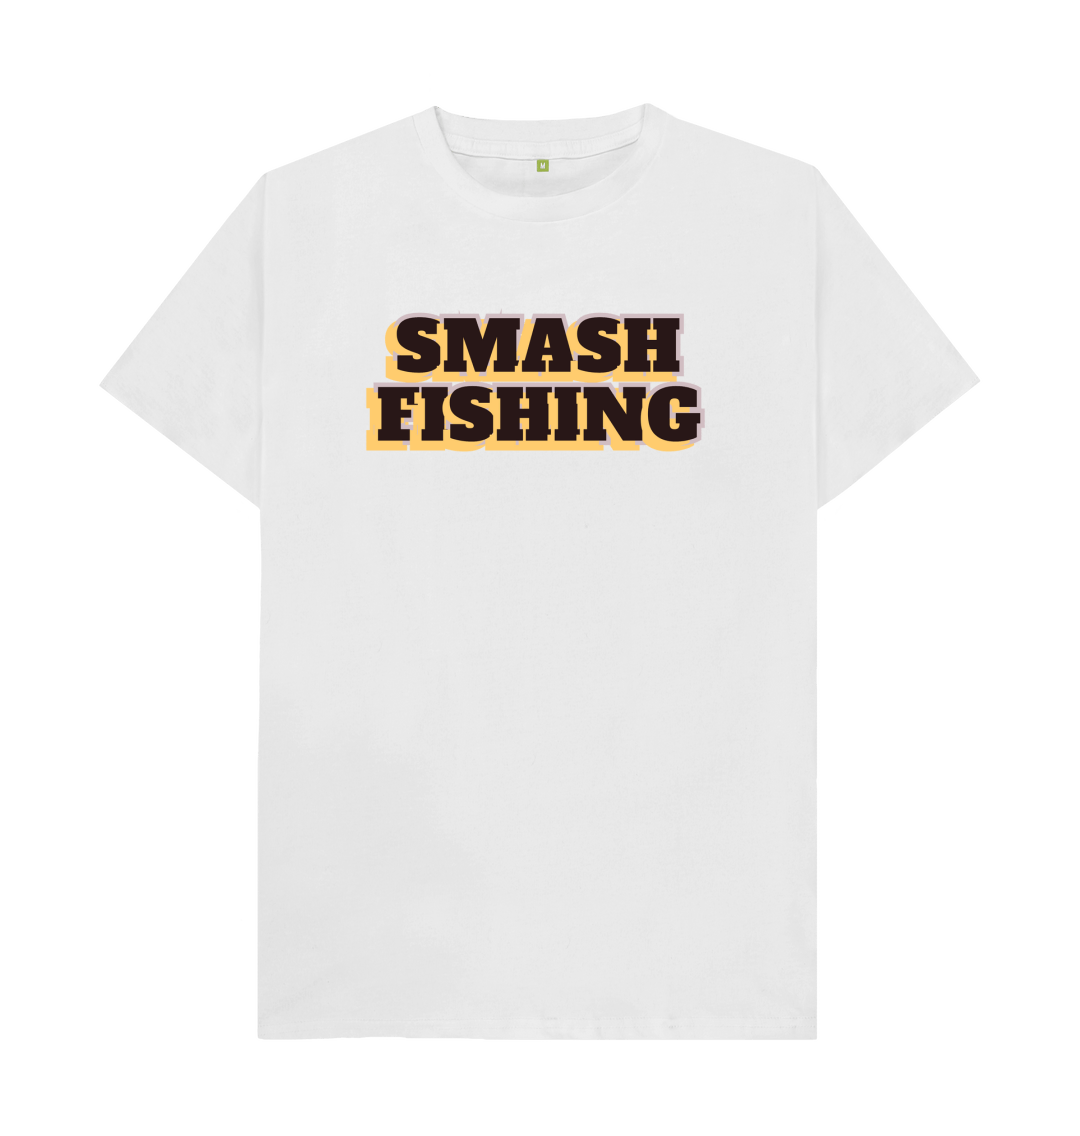 MEN'S SMASH FISHING T-SHIRT - BOLD WRITING